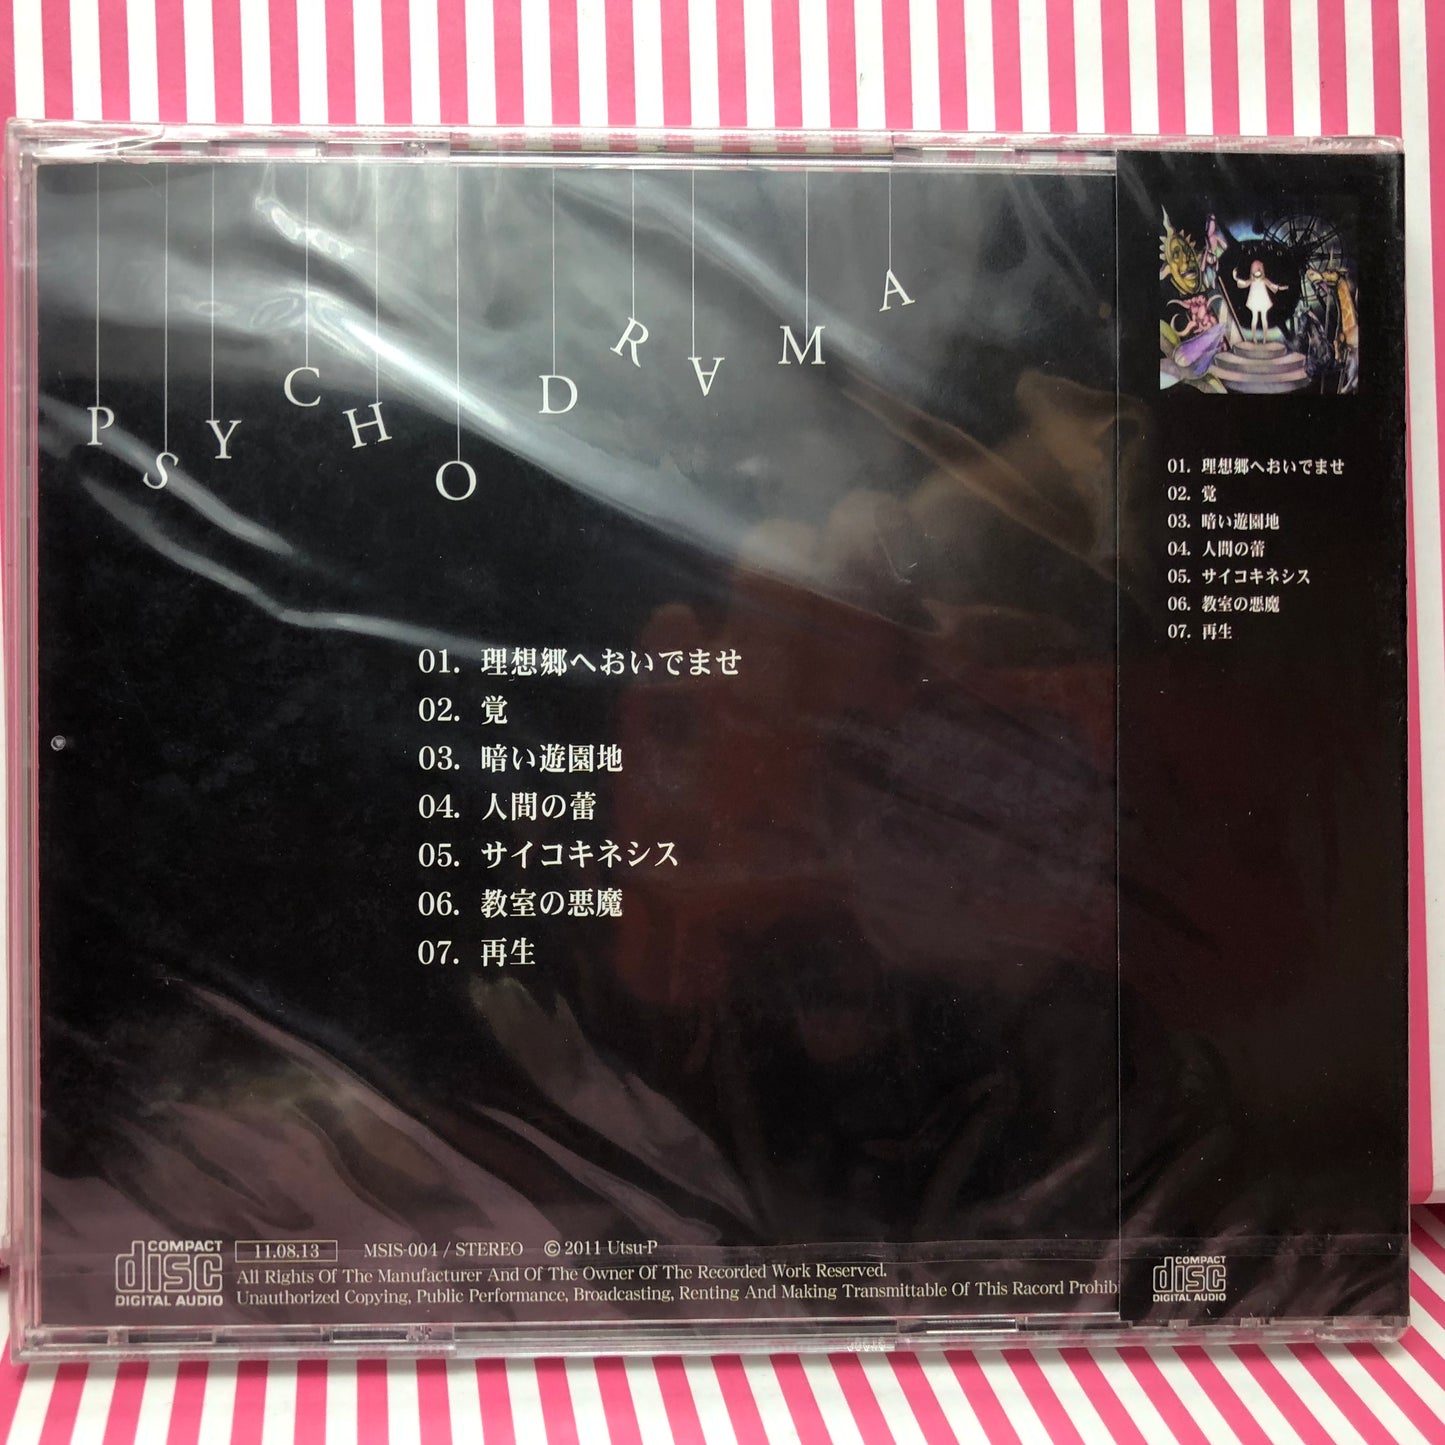 Utsu-P - CD Psychodrame